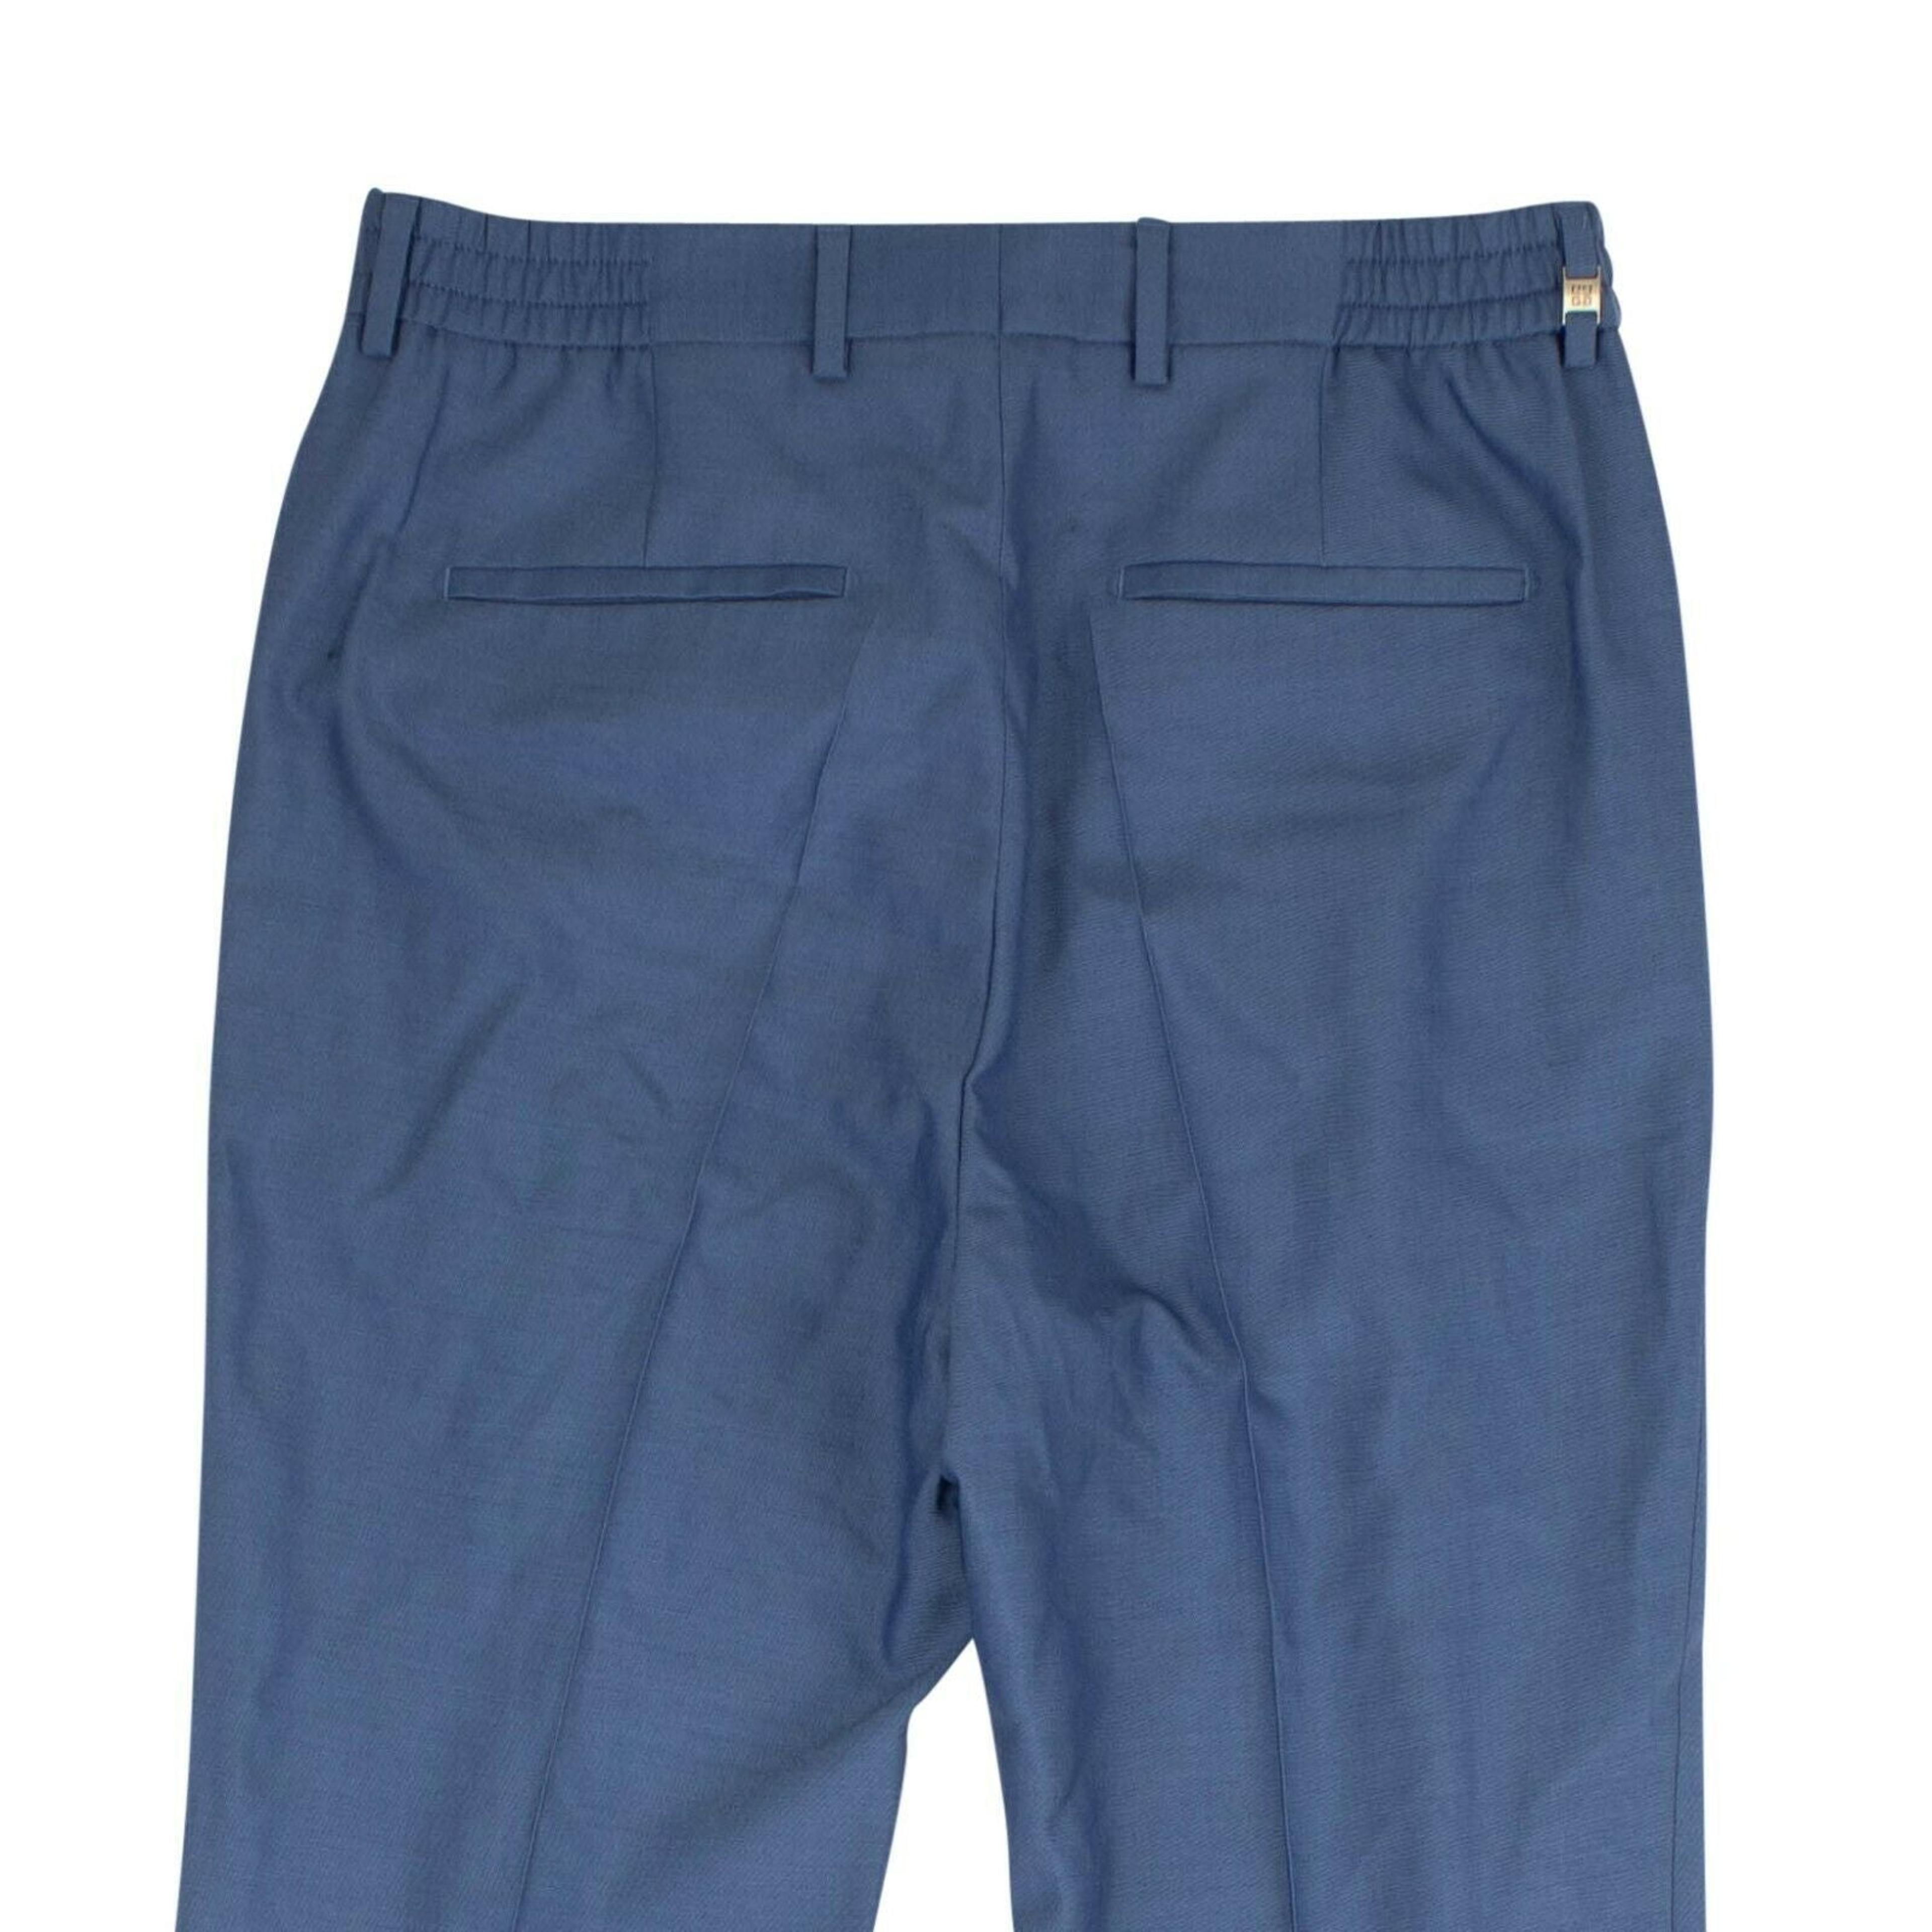 Alternate View 3 of Men's Blue Pleated Pants